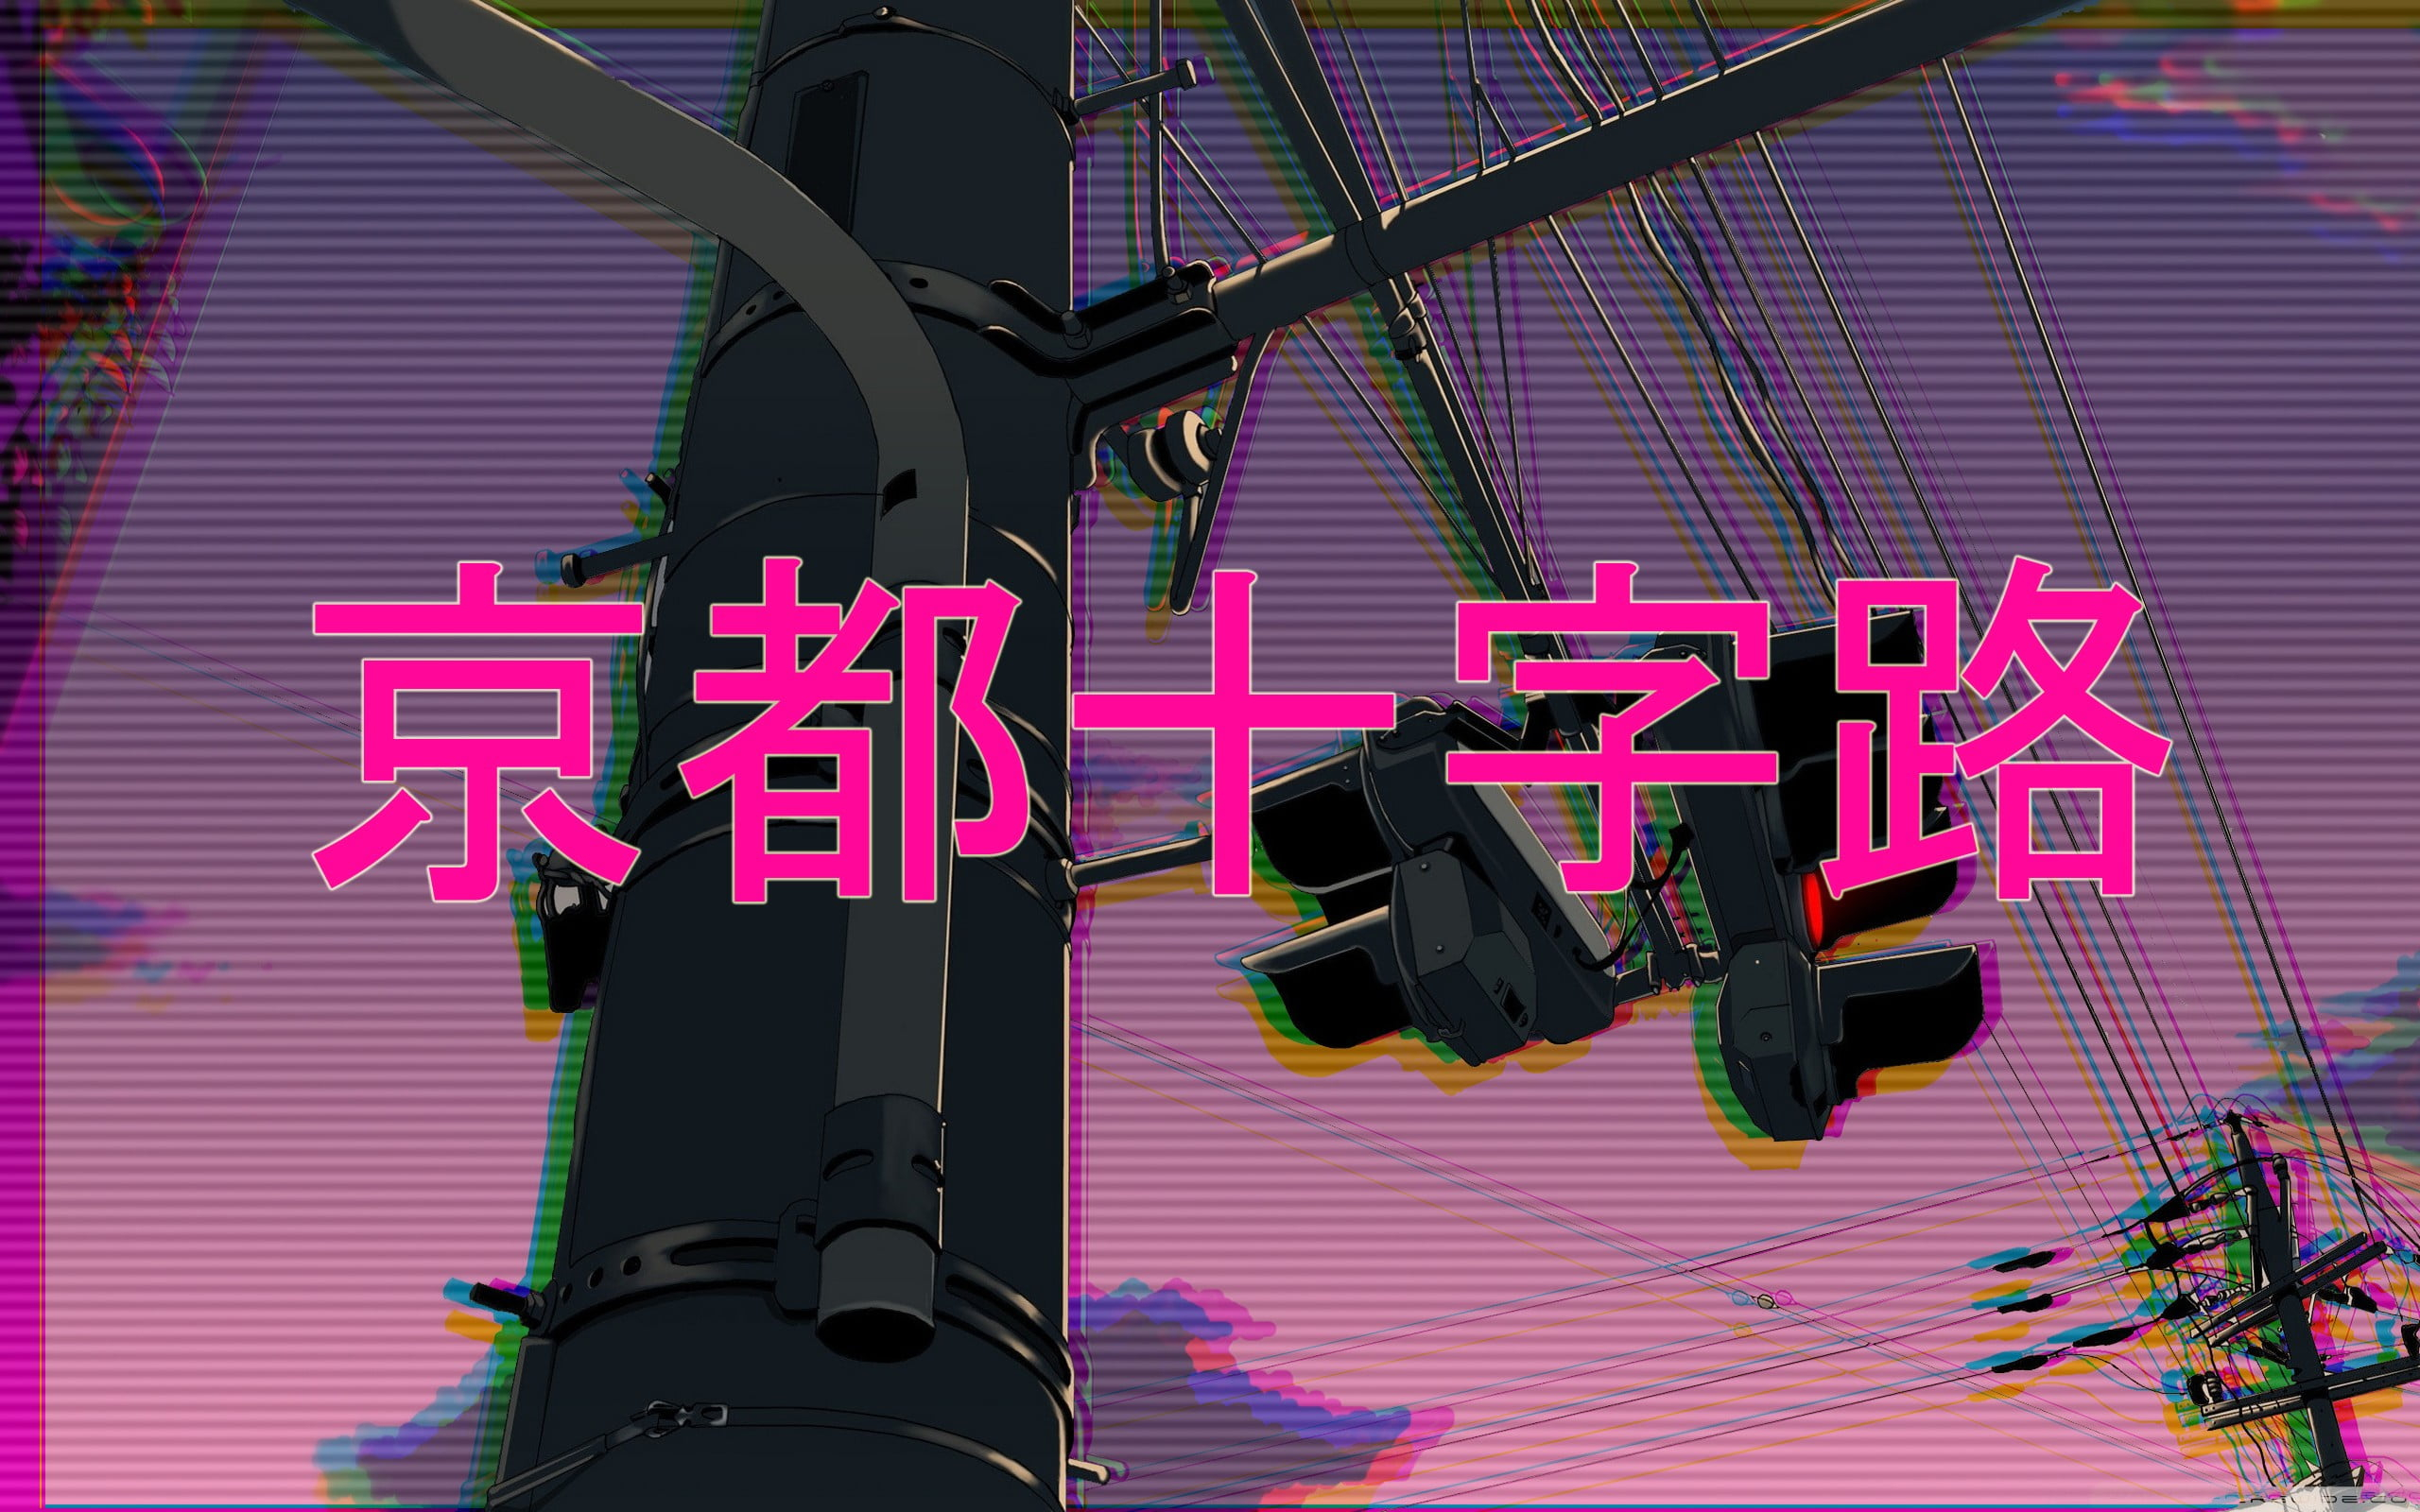 kanji text wallpaper vaporwave 1980s